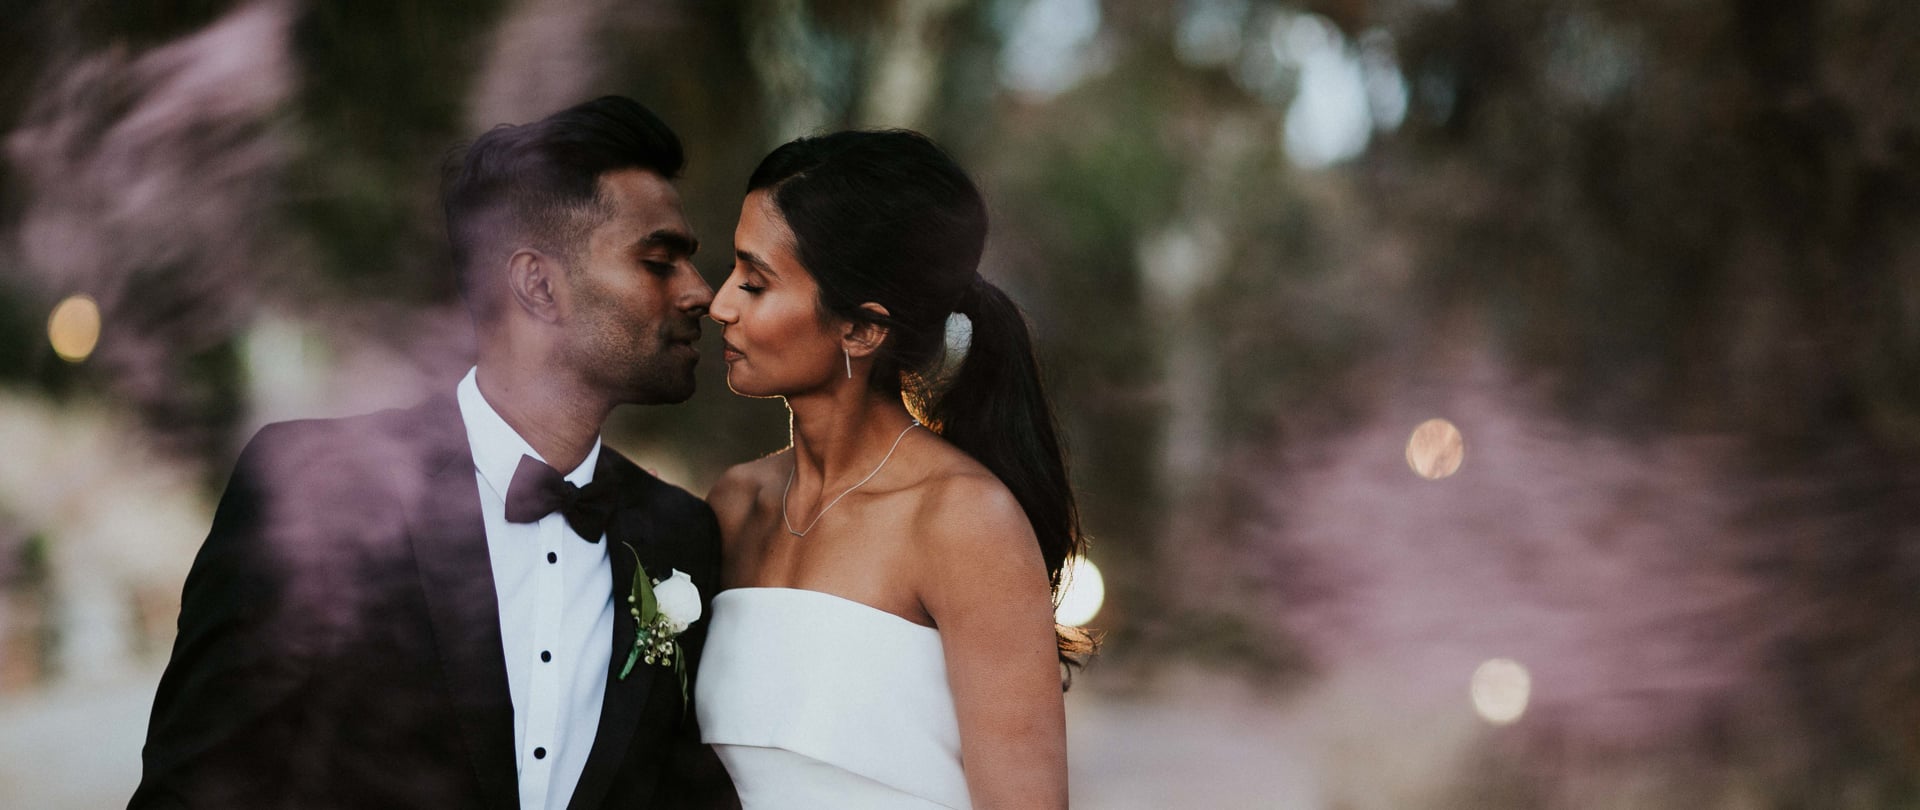 Charms & Sudesh Wedding Video Filmed atTasmania,Australia